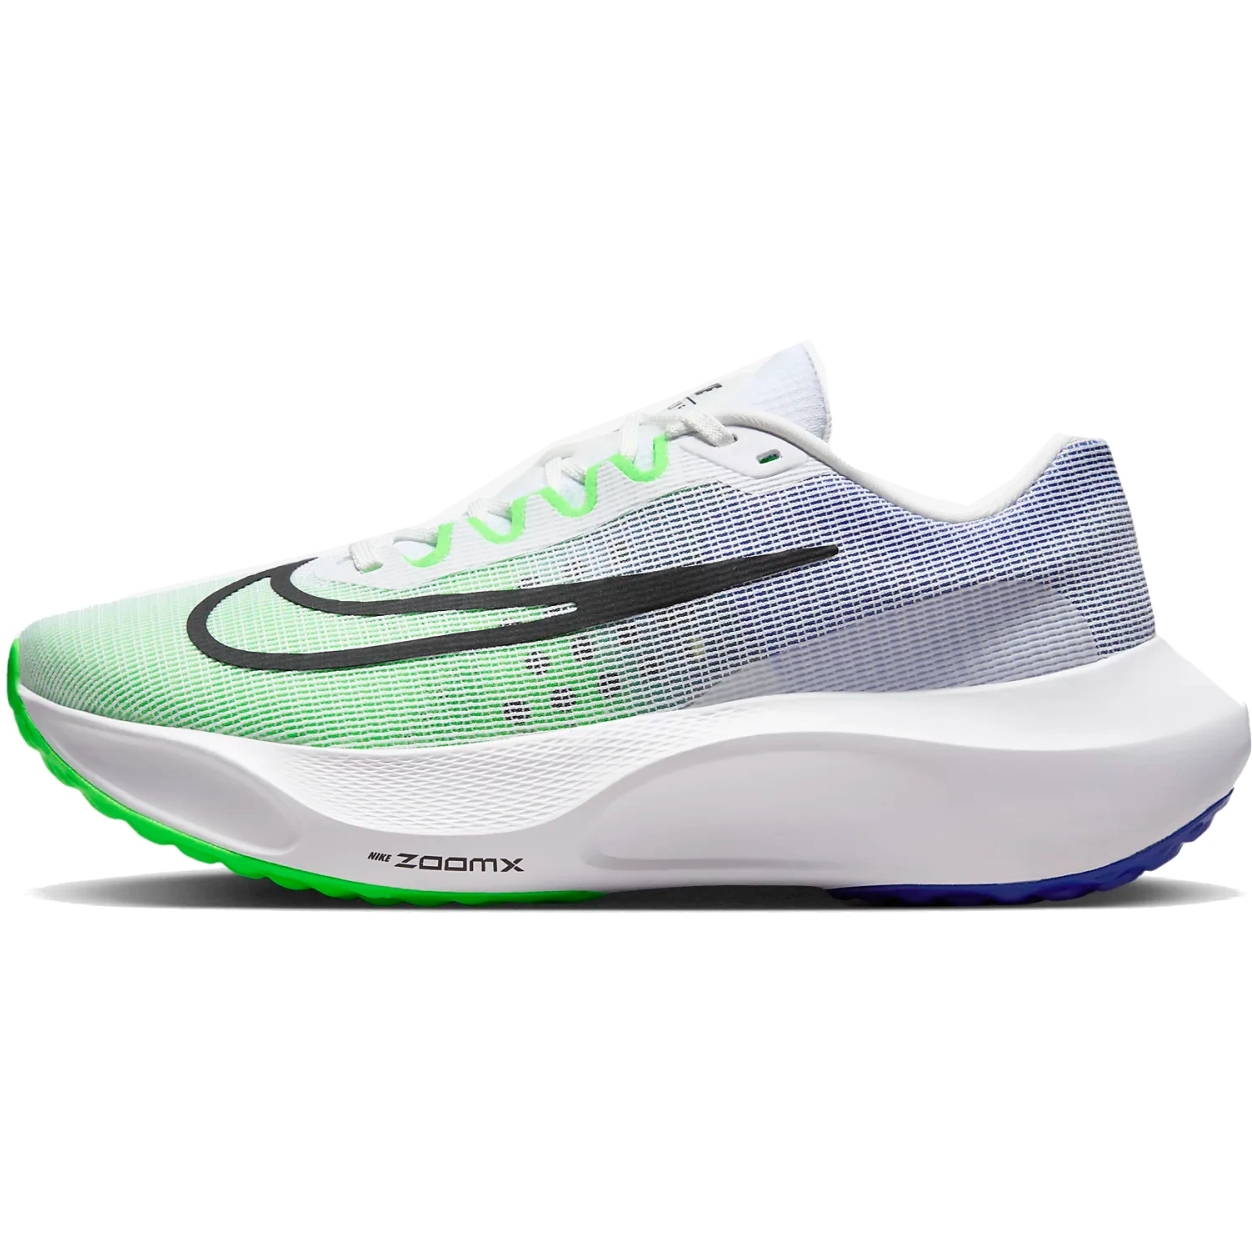 Productfoto van Nike Zoom Fly 5 Hardloopschoenen Heren - white/green strike/racer blue/black DM8968-101